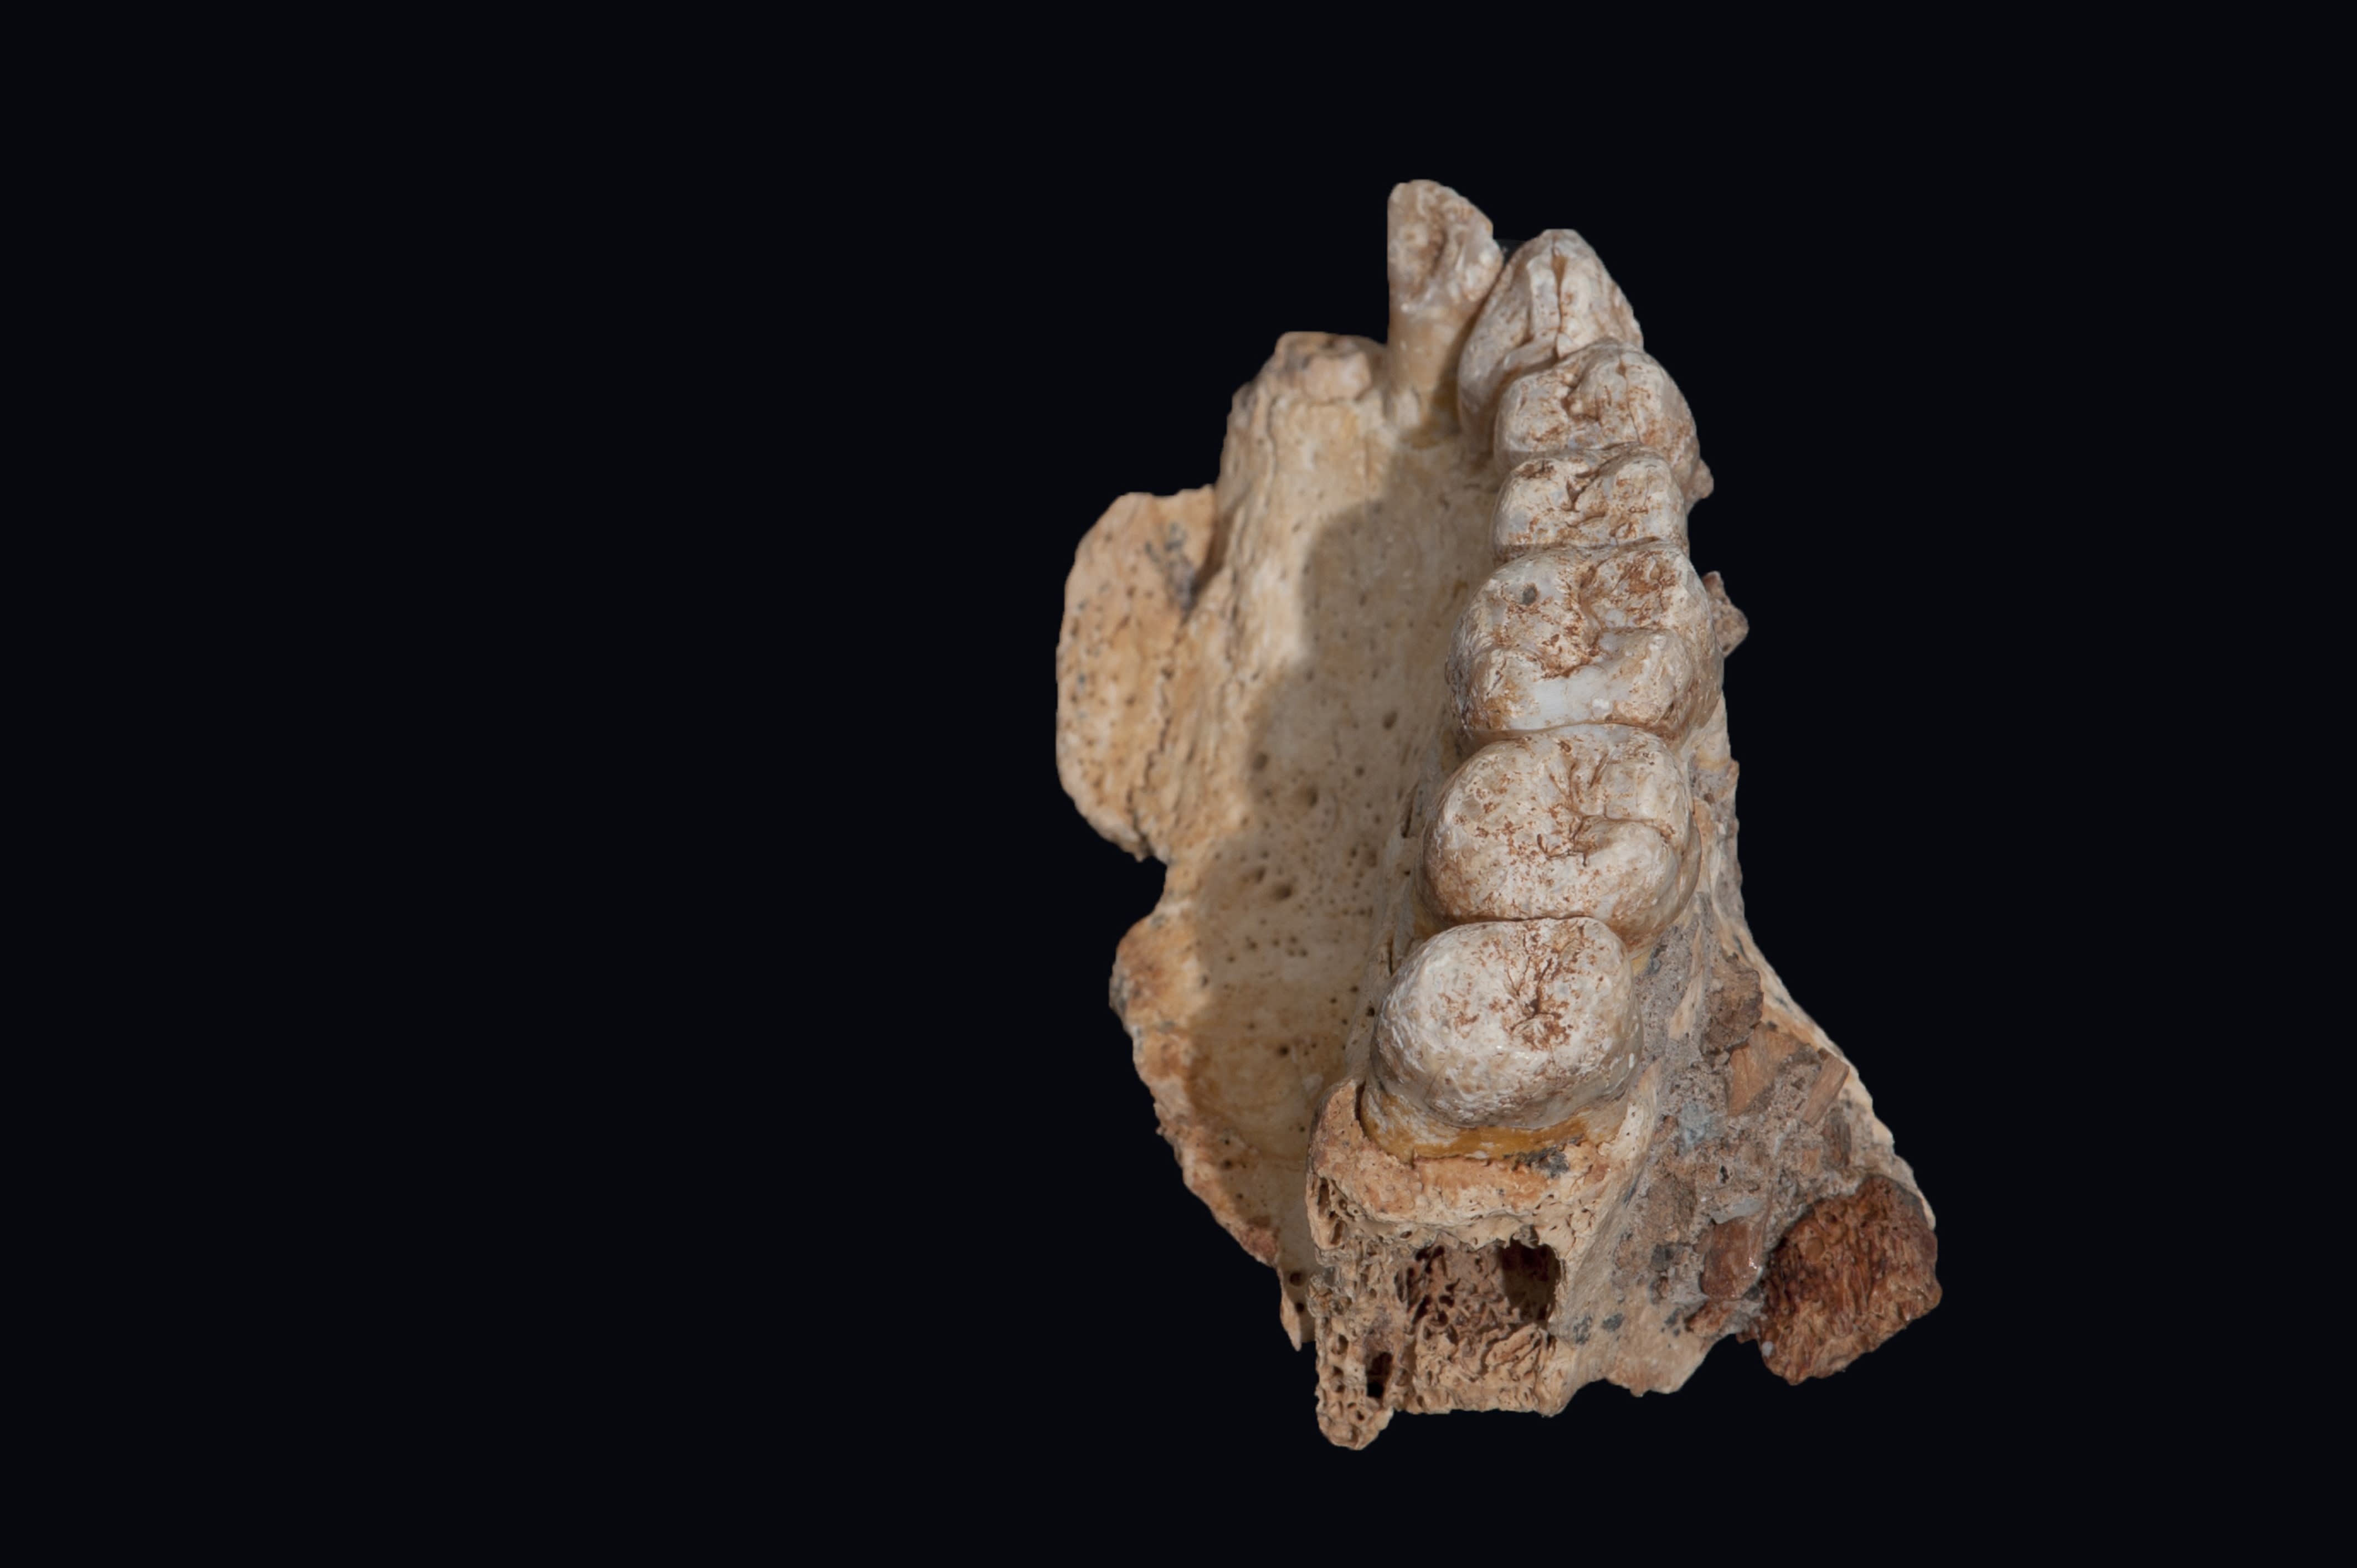  The maxilla (upper jaw) found in a cave in Mount Carmel. (COURTESY OF ISRAEL HERSHKOVITZ / TEL AVIV UNIVERSITY)